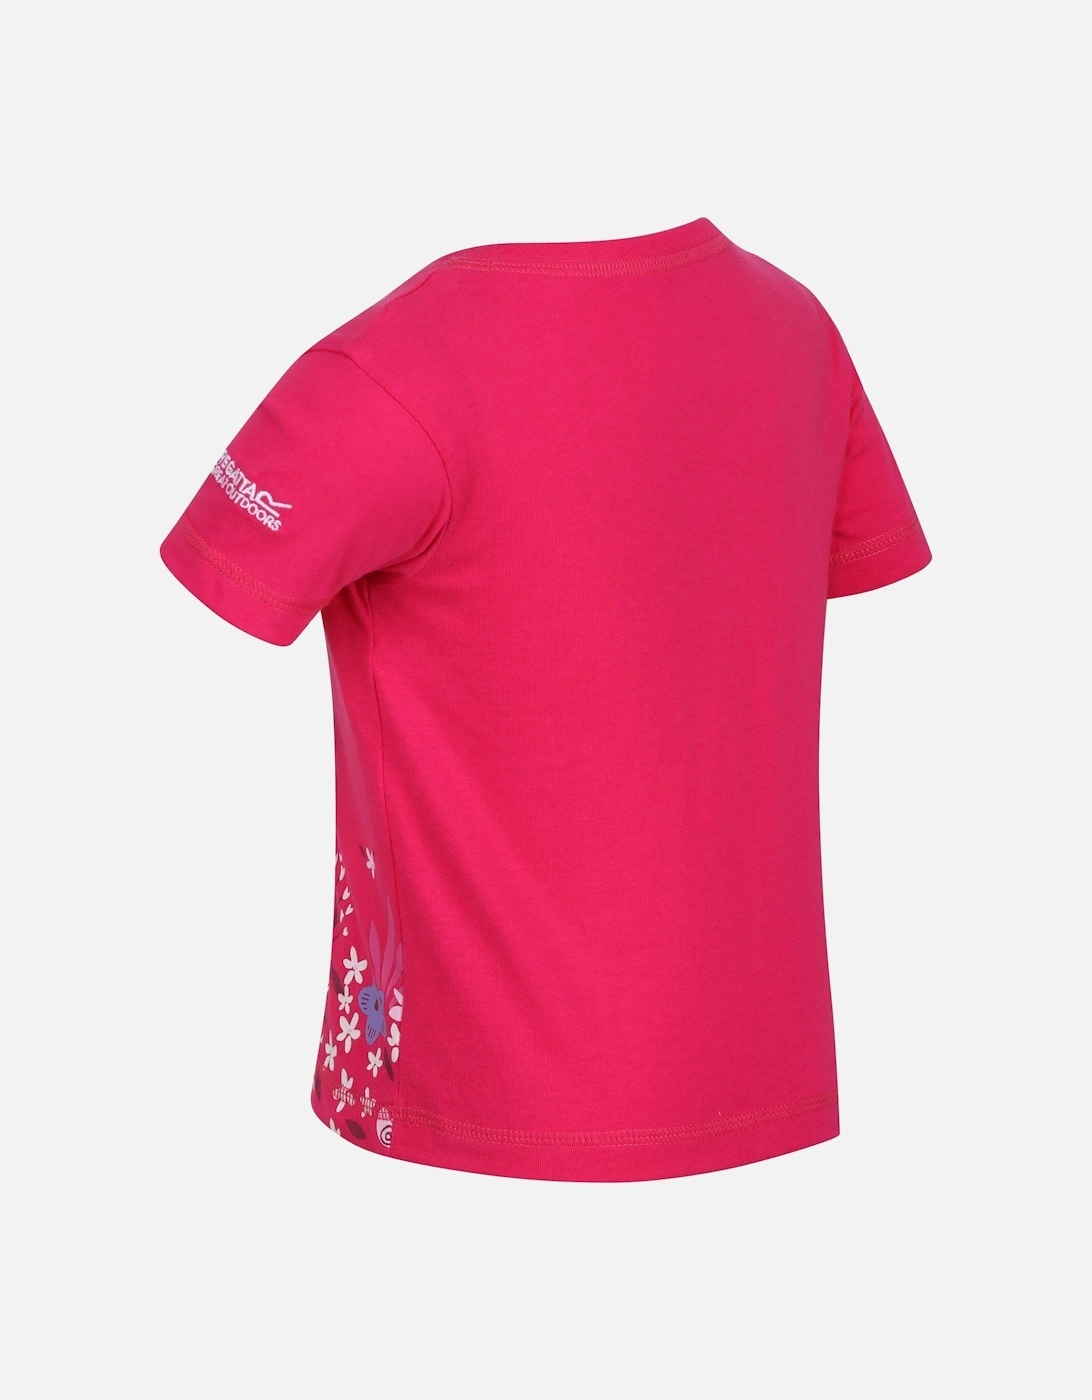 Childrens/Kids Peppa Pig Flower Short-Sleeved T-Shirt